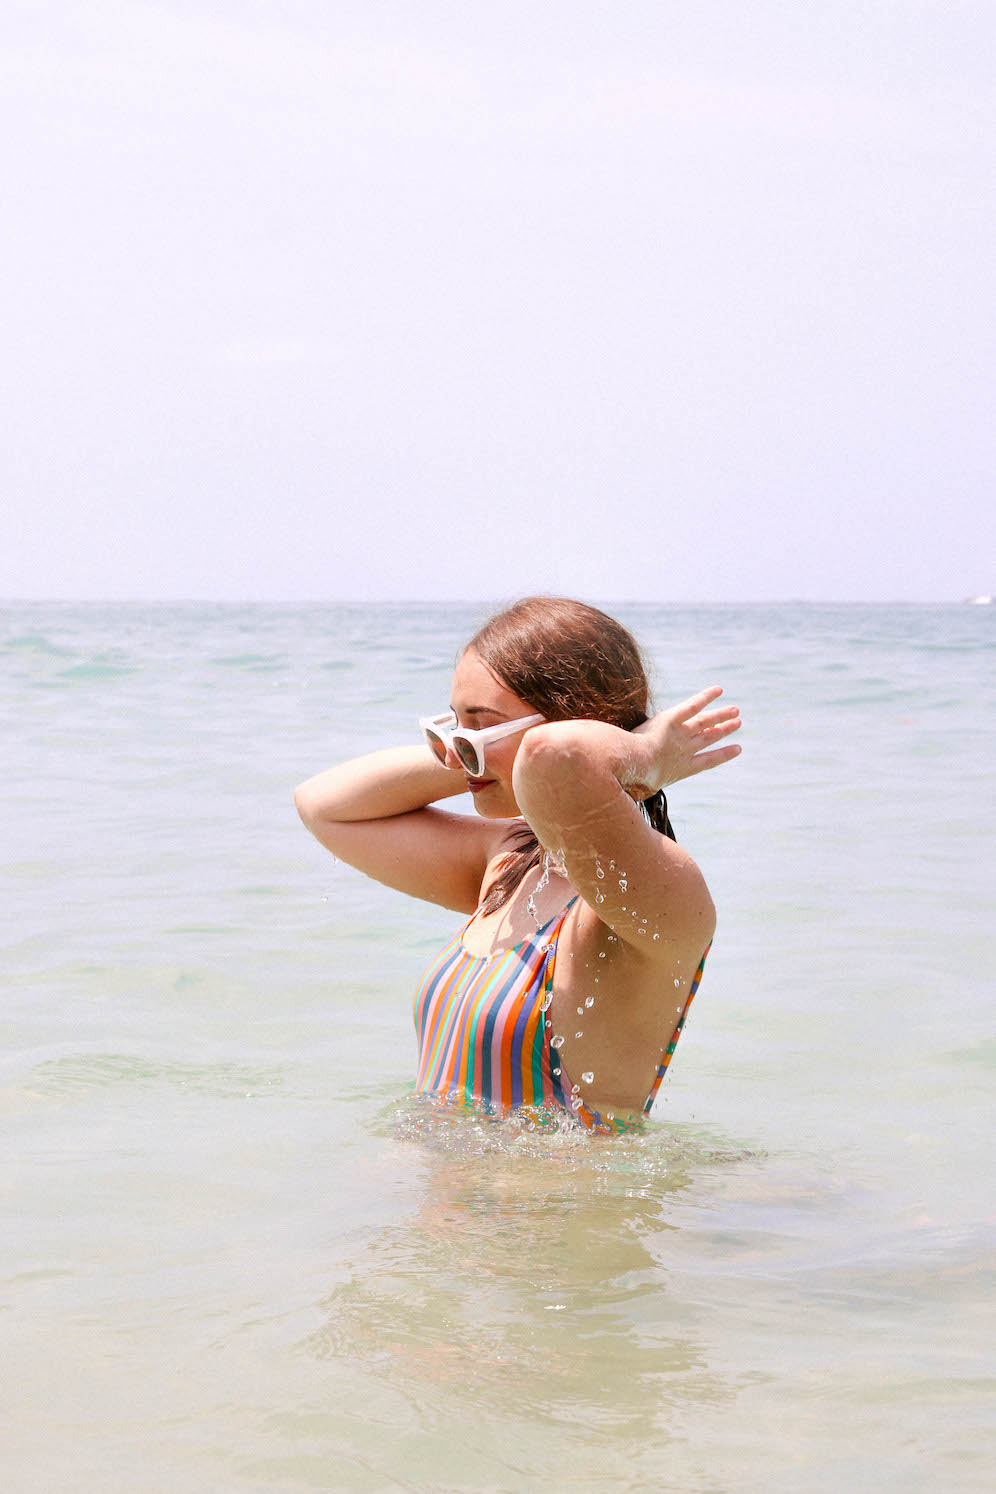 Why I Felt Insecure at The Beach, And How I Found My Confidence | The Coastal Confidence by Aubrey Yandow